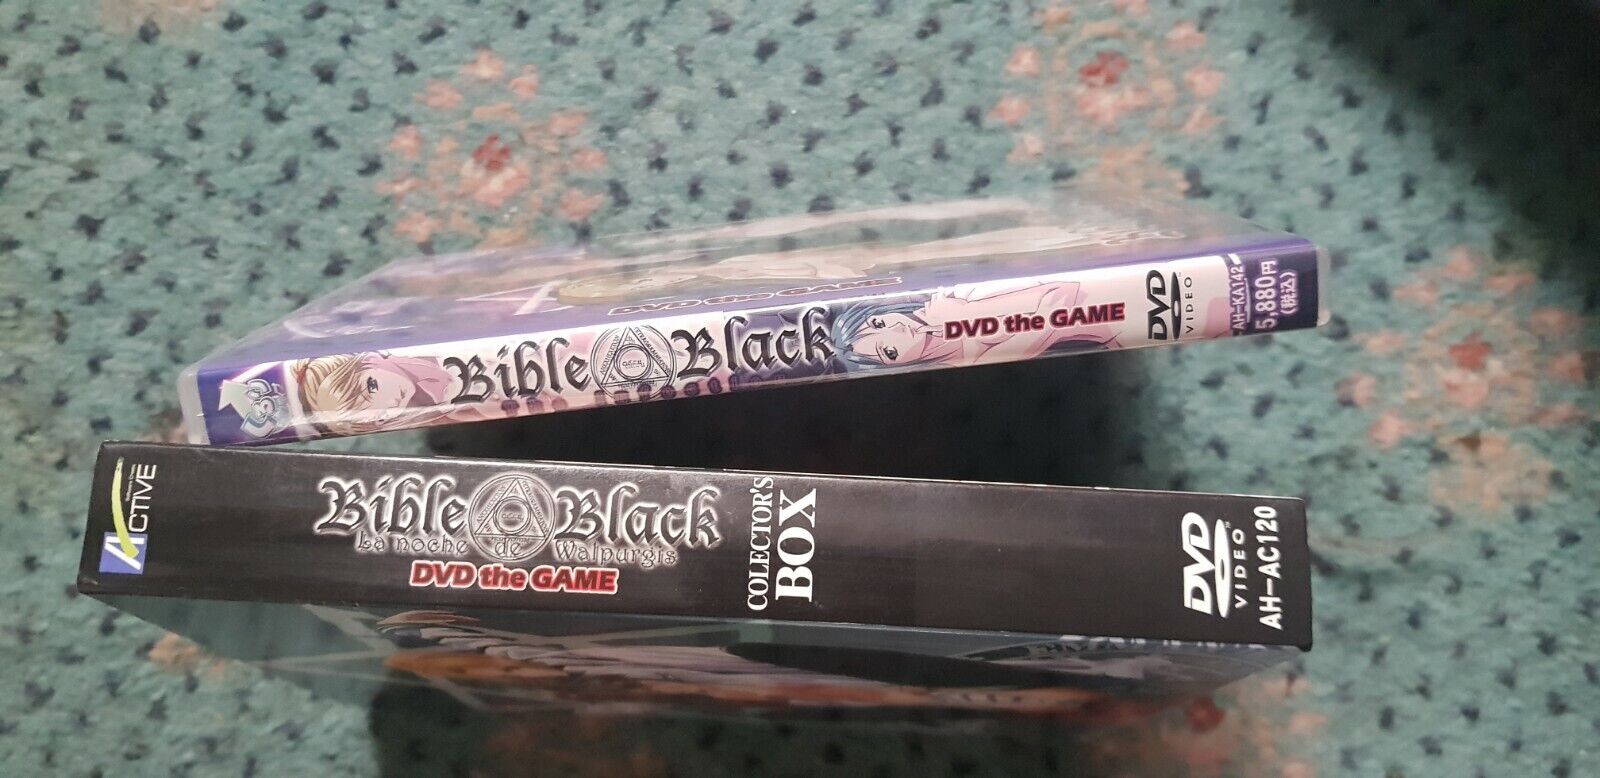 dana ghinea recommends Bible Black Video Game